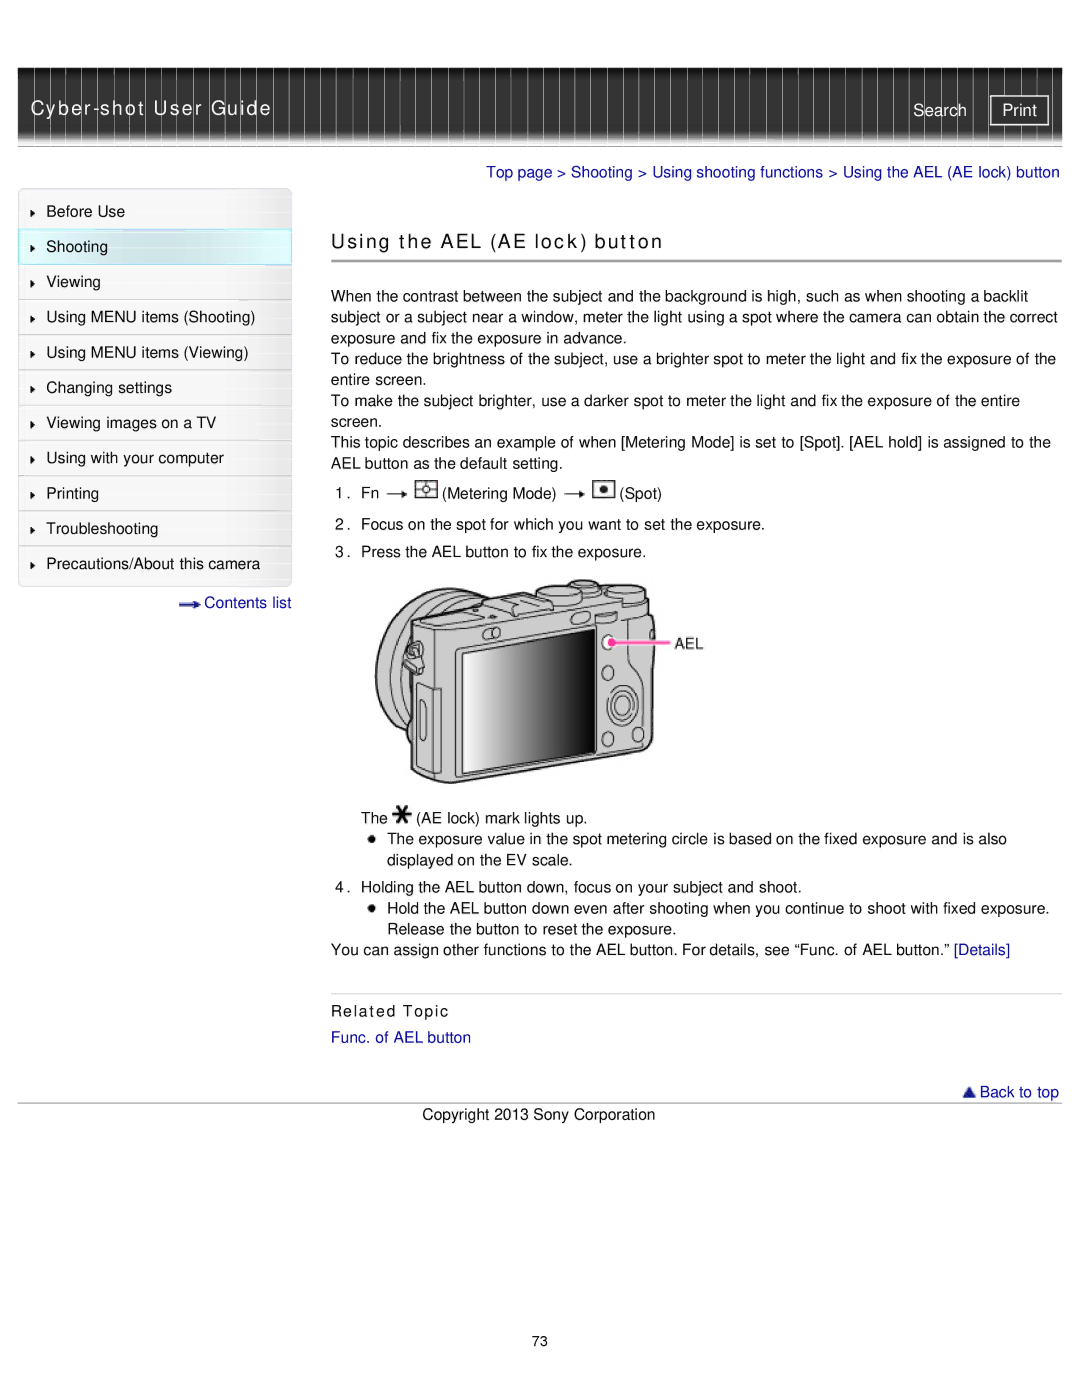 Sony DSC-RX1/RX1R manual Using the AEL AE lock button 